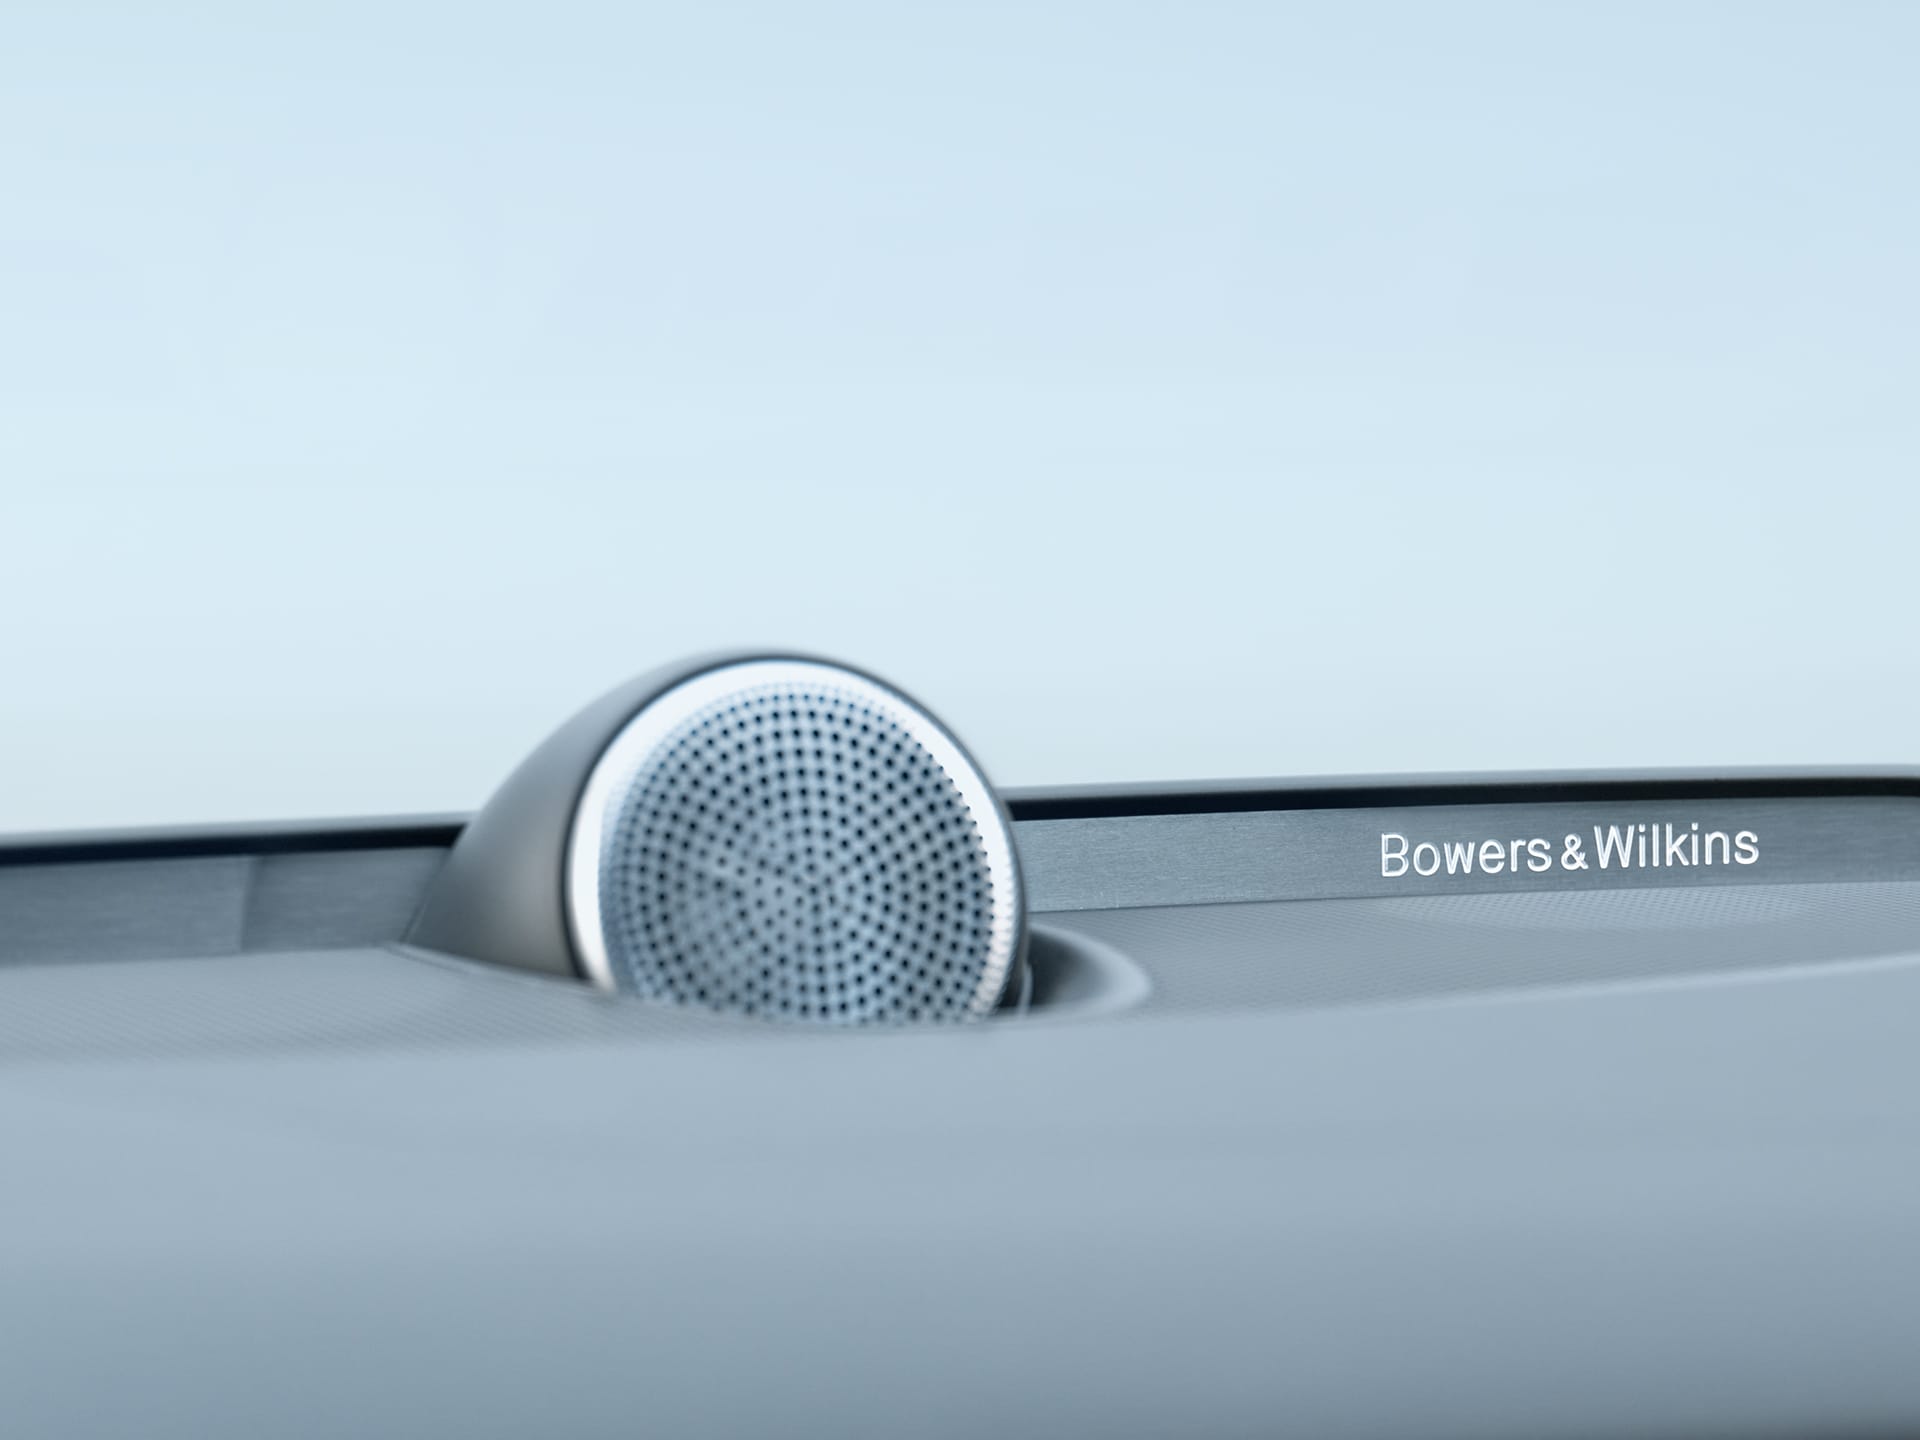 مكبرات الصوت Bowers & Wilkins داخل فولفو S60 سيدان.